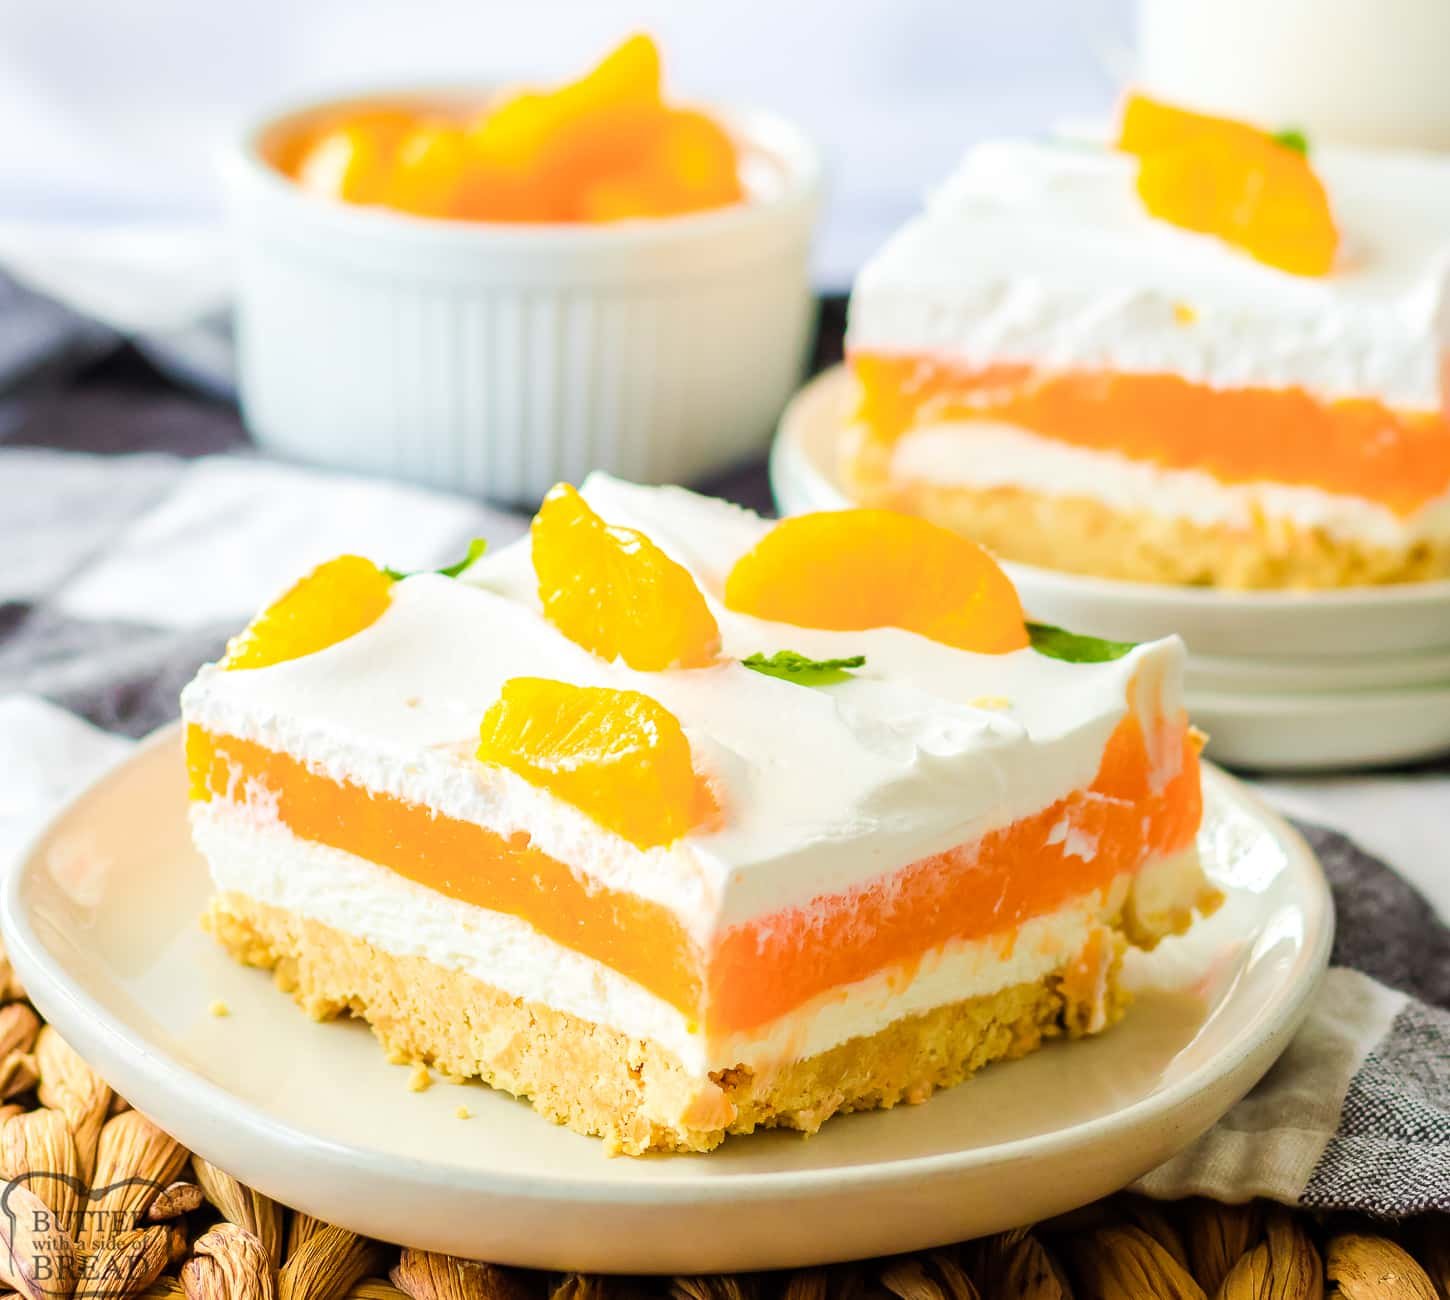 orange lush dessert with layers of jello and cream